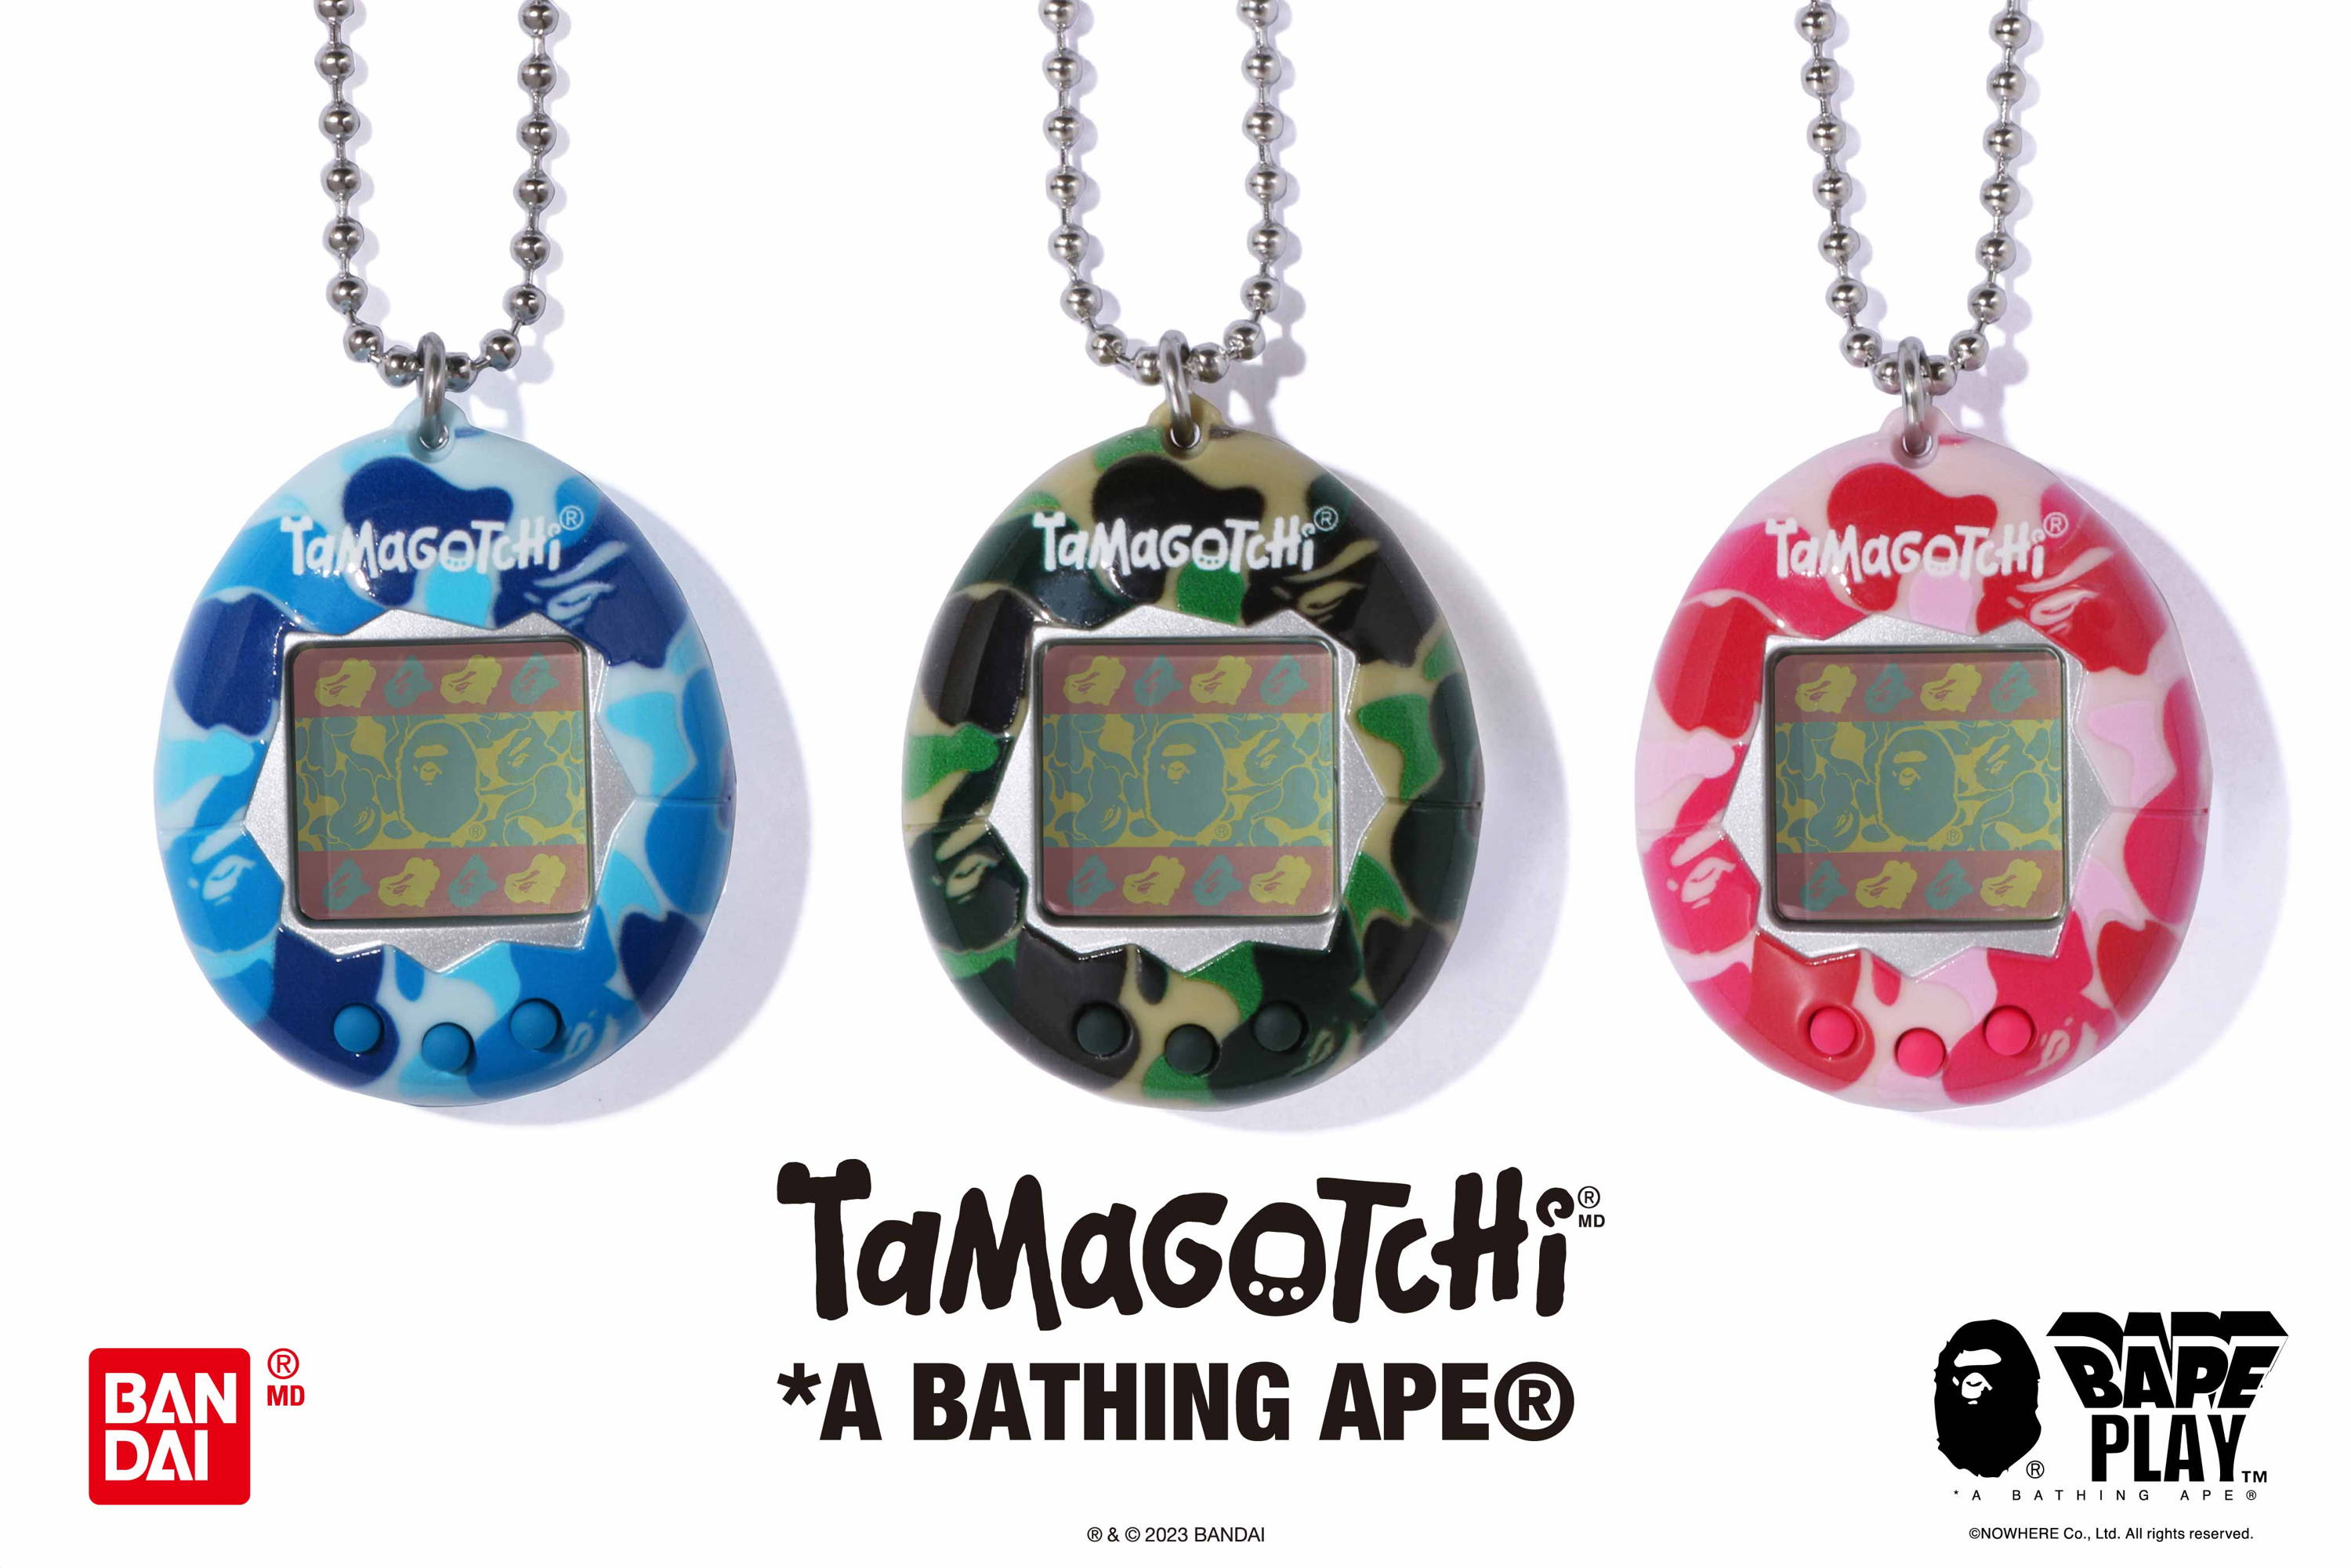 BAPE X TAMAGOTCHI | bape.com